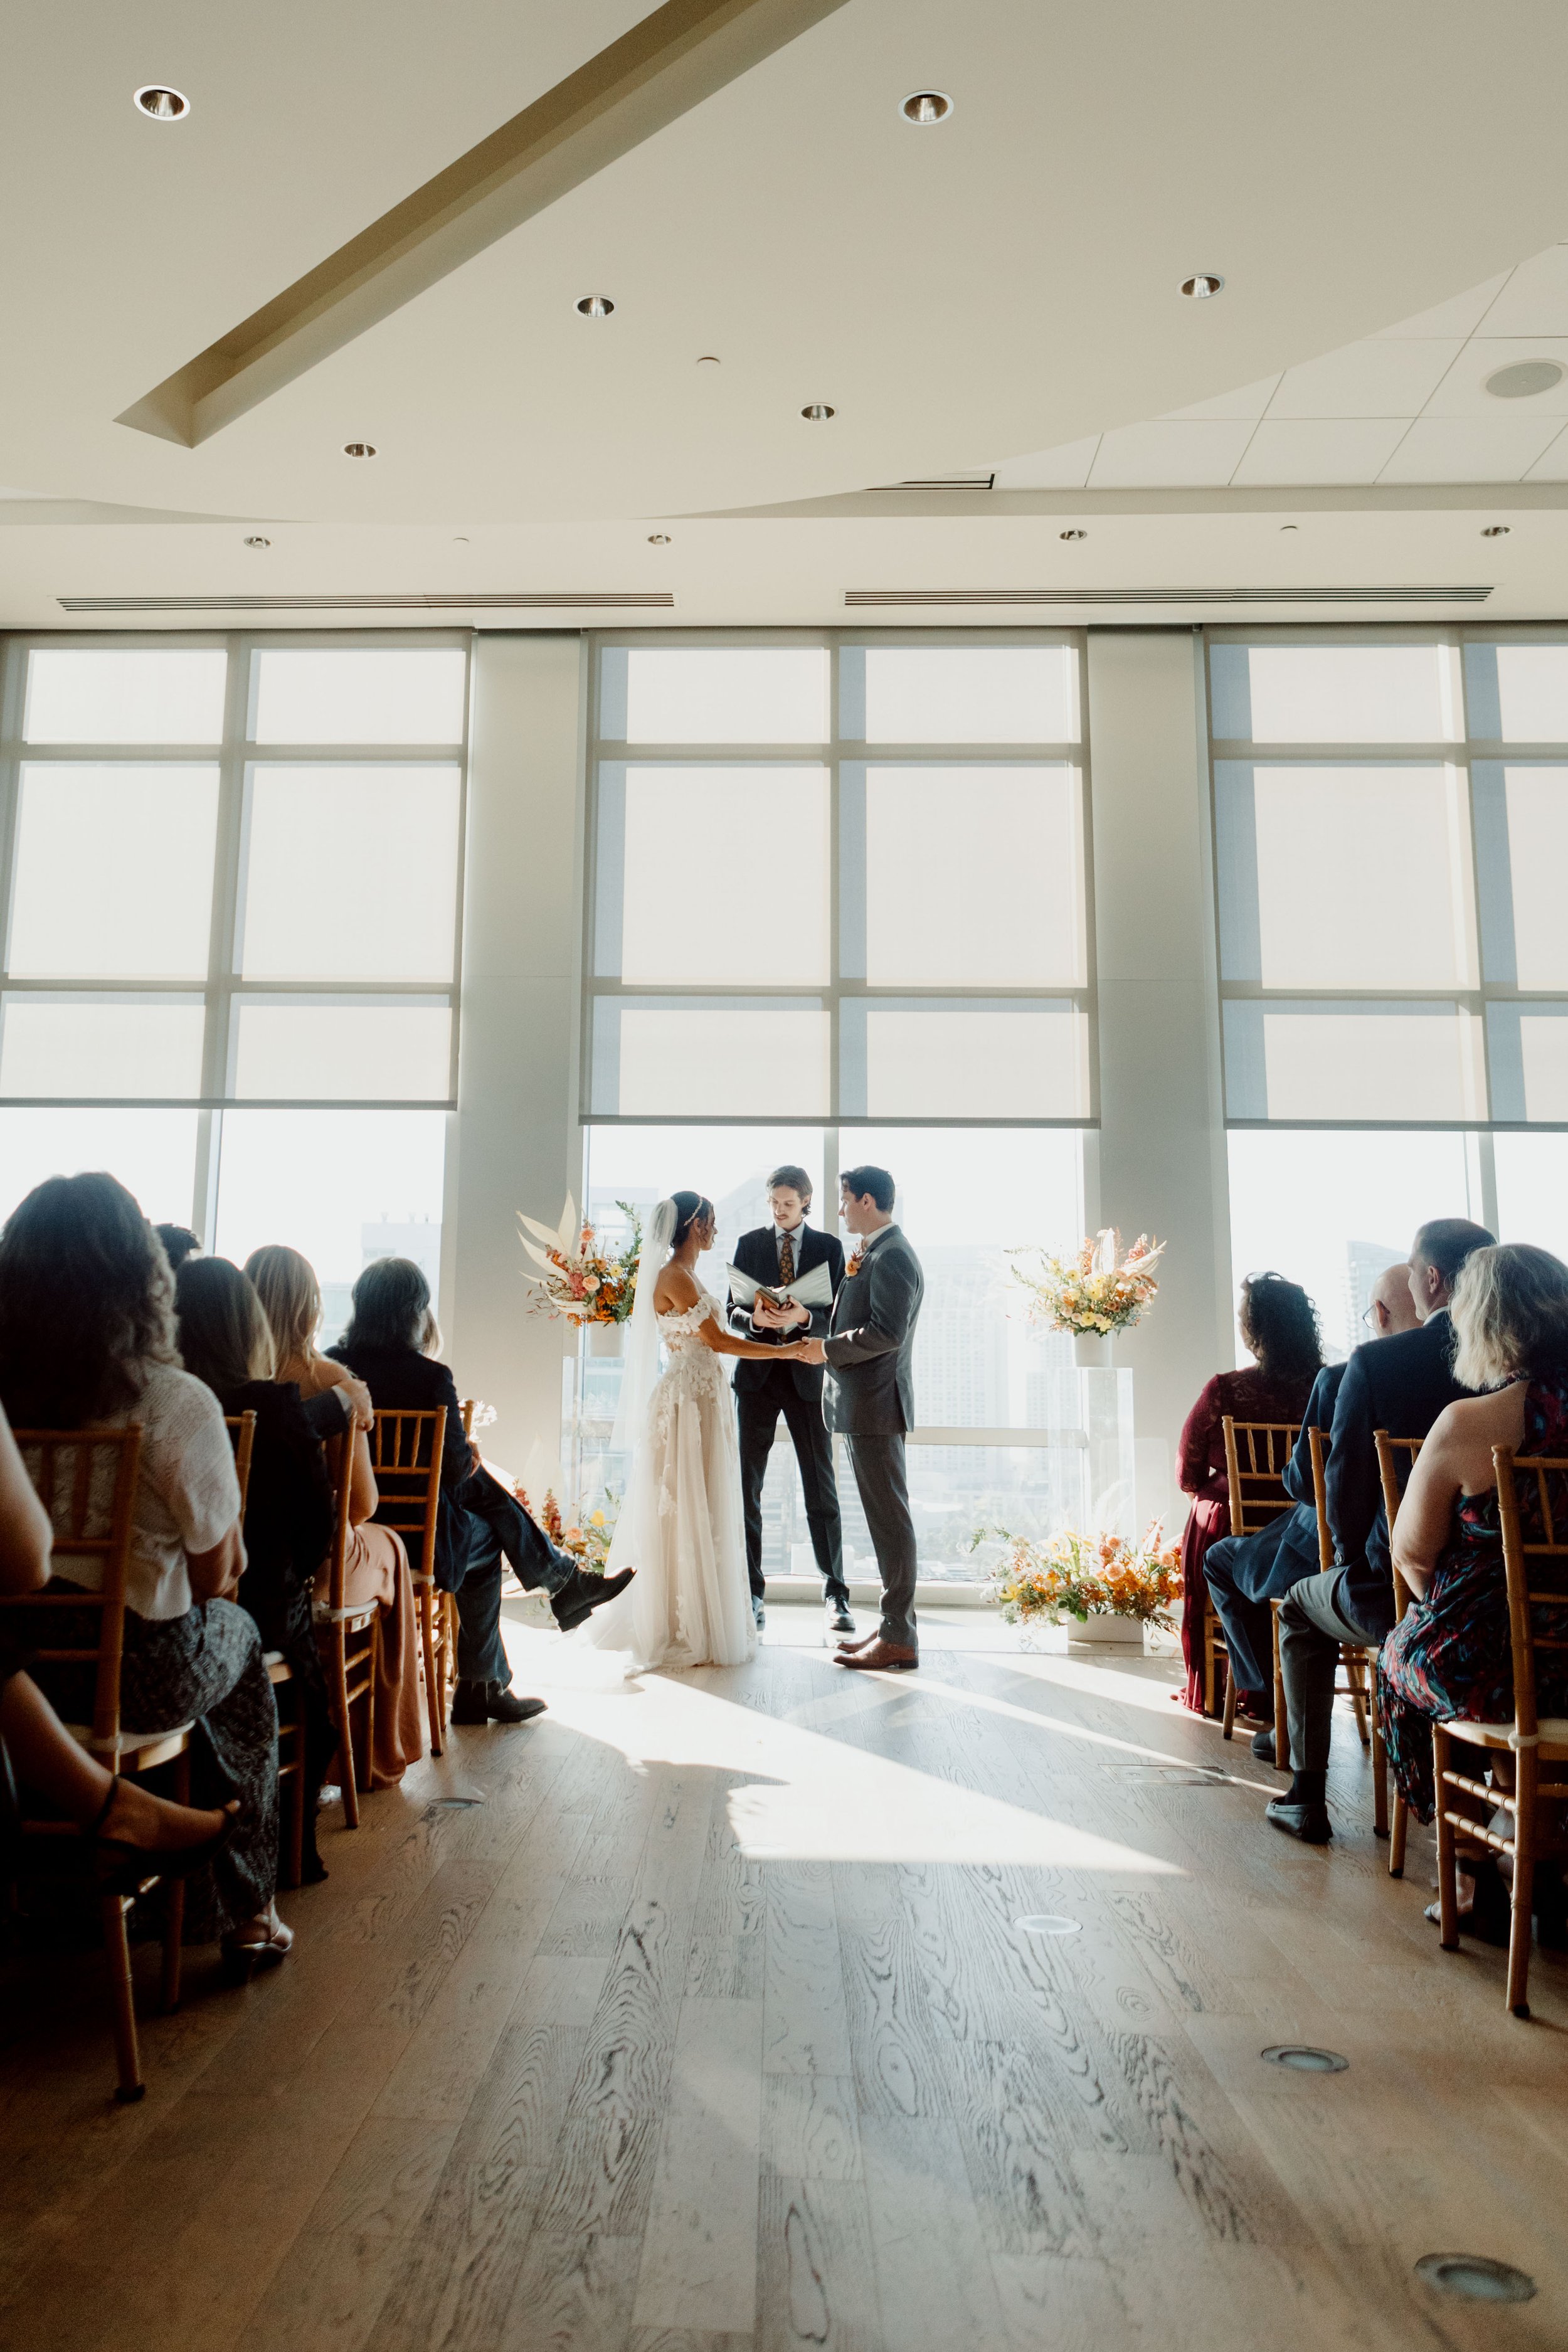 San Diego wedding photography